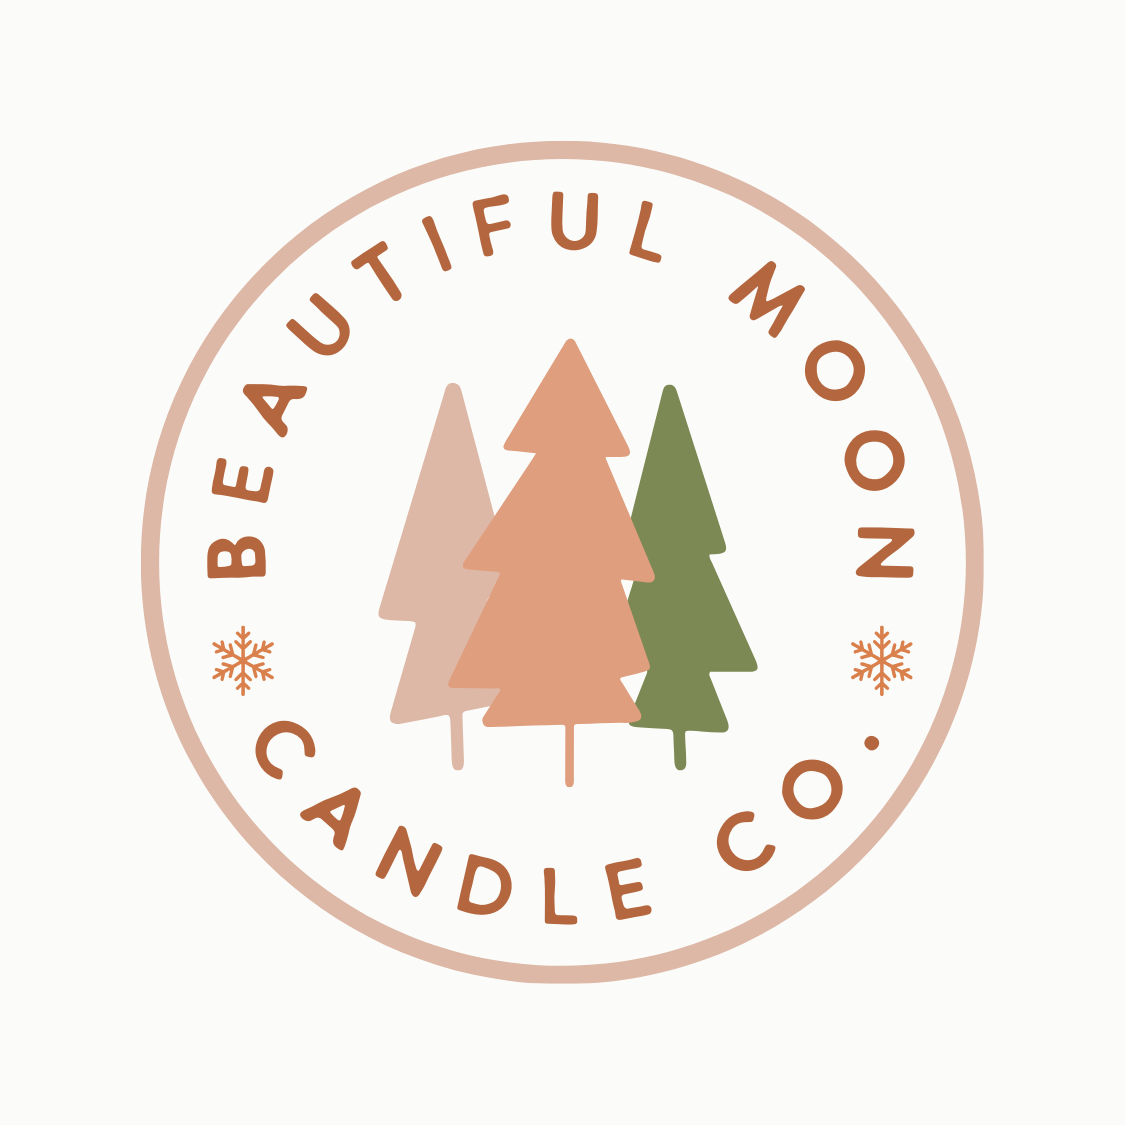 Beautiful Moon Candle Co.